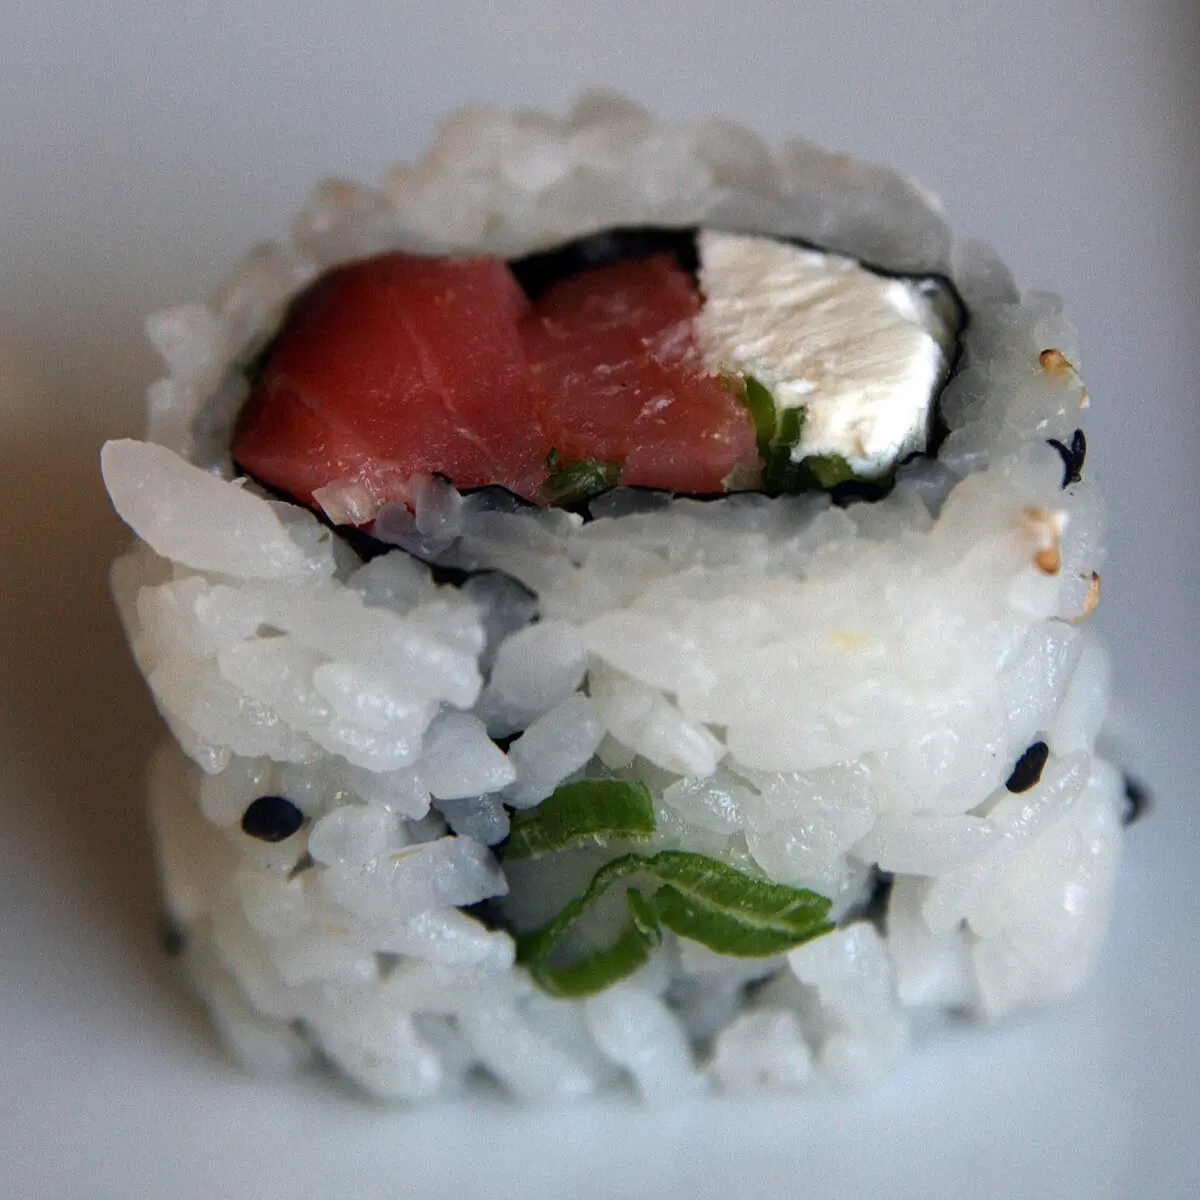 smoked salmon sushi - What is smoked salmon sushi called